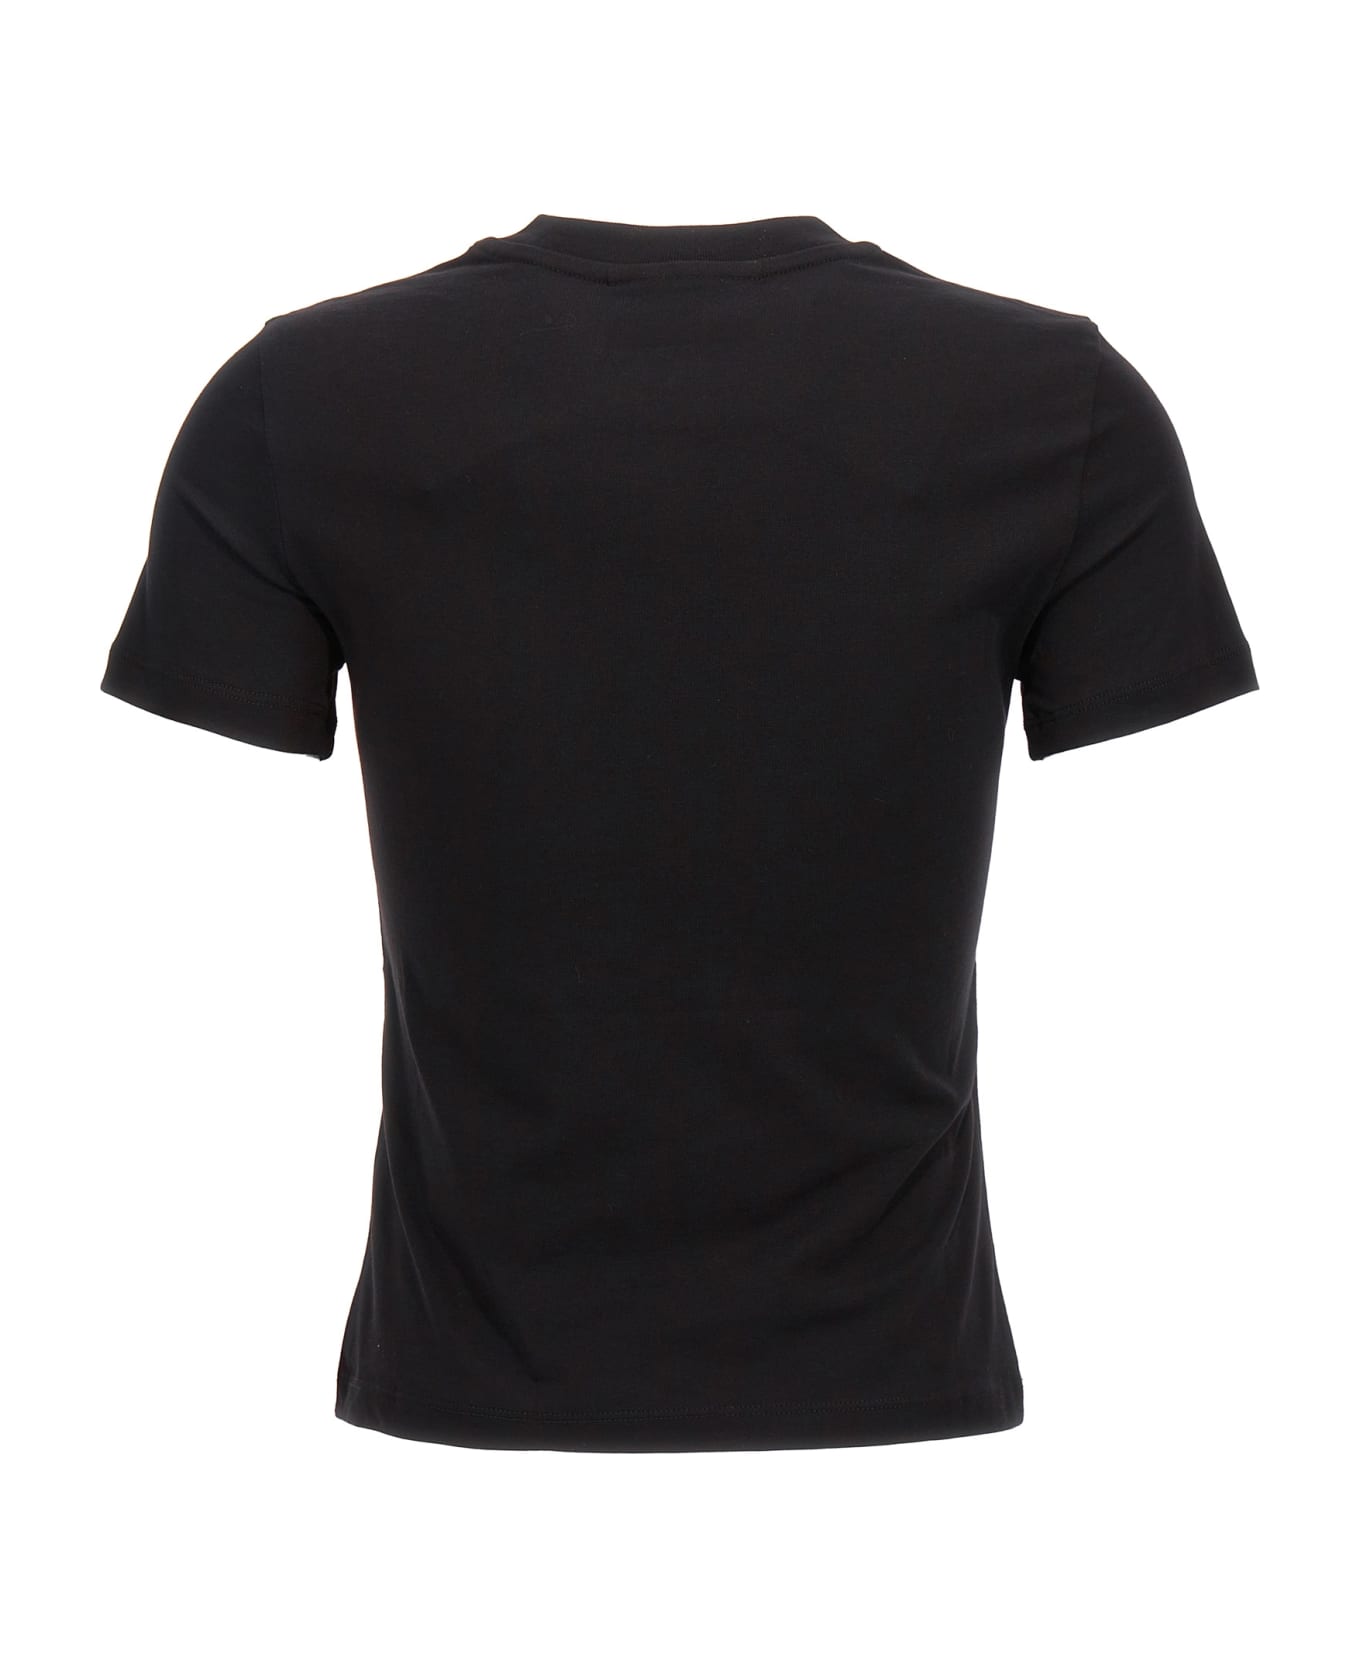 Chiara Ferragni 'girls Supporting Girls' T-shirt - Black   Tシャツ